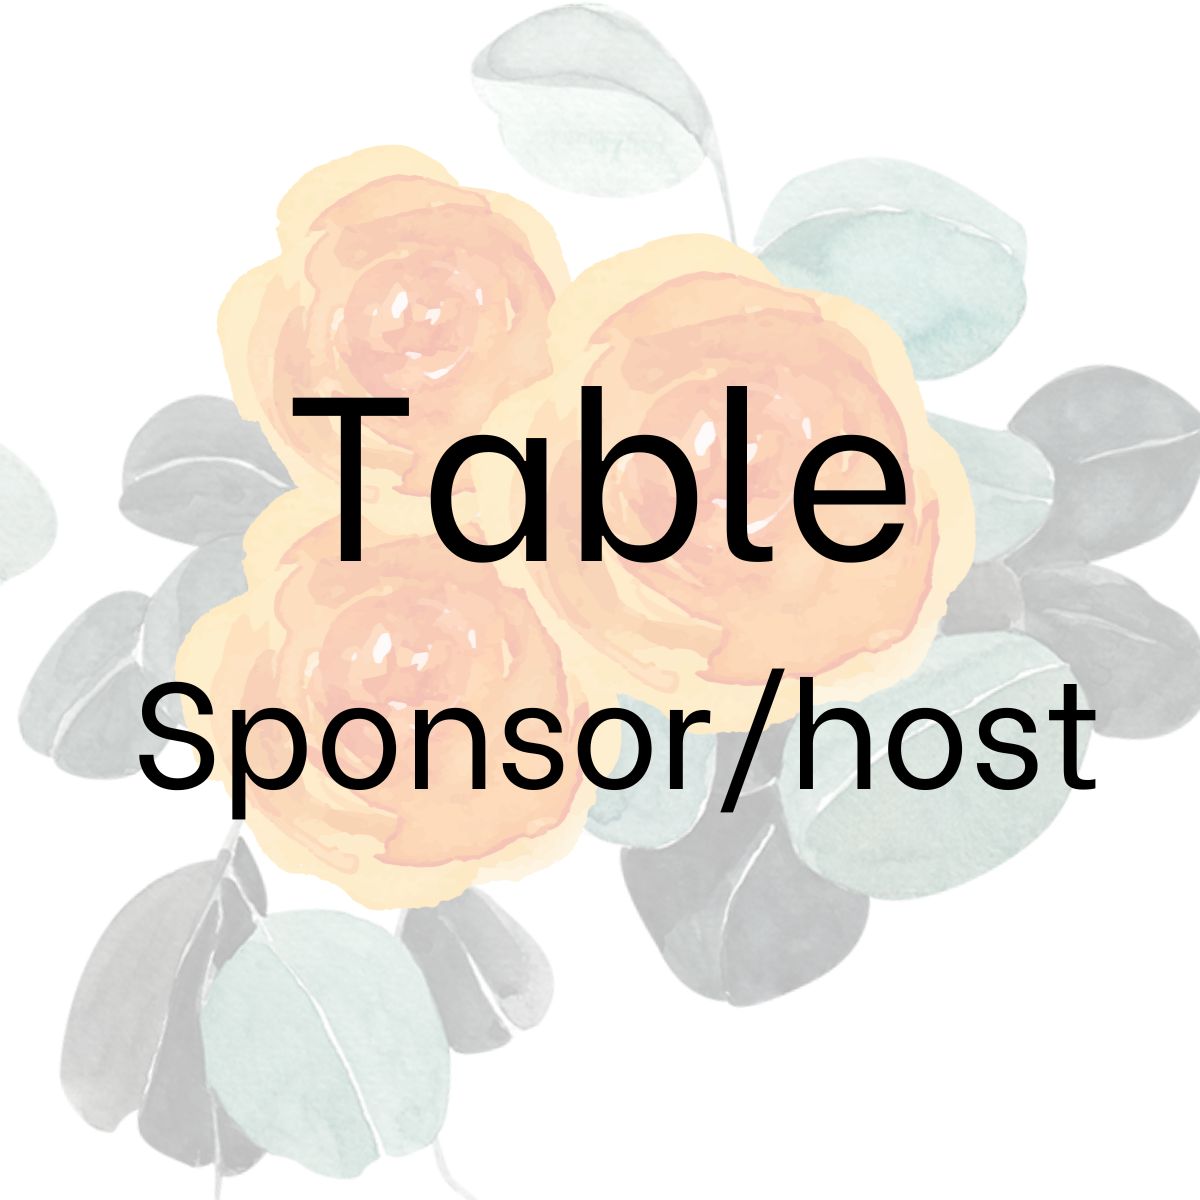 Table Host / Table Sponsor form